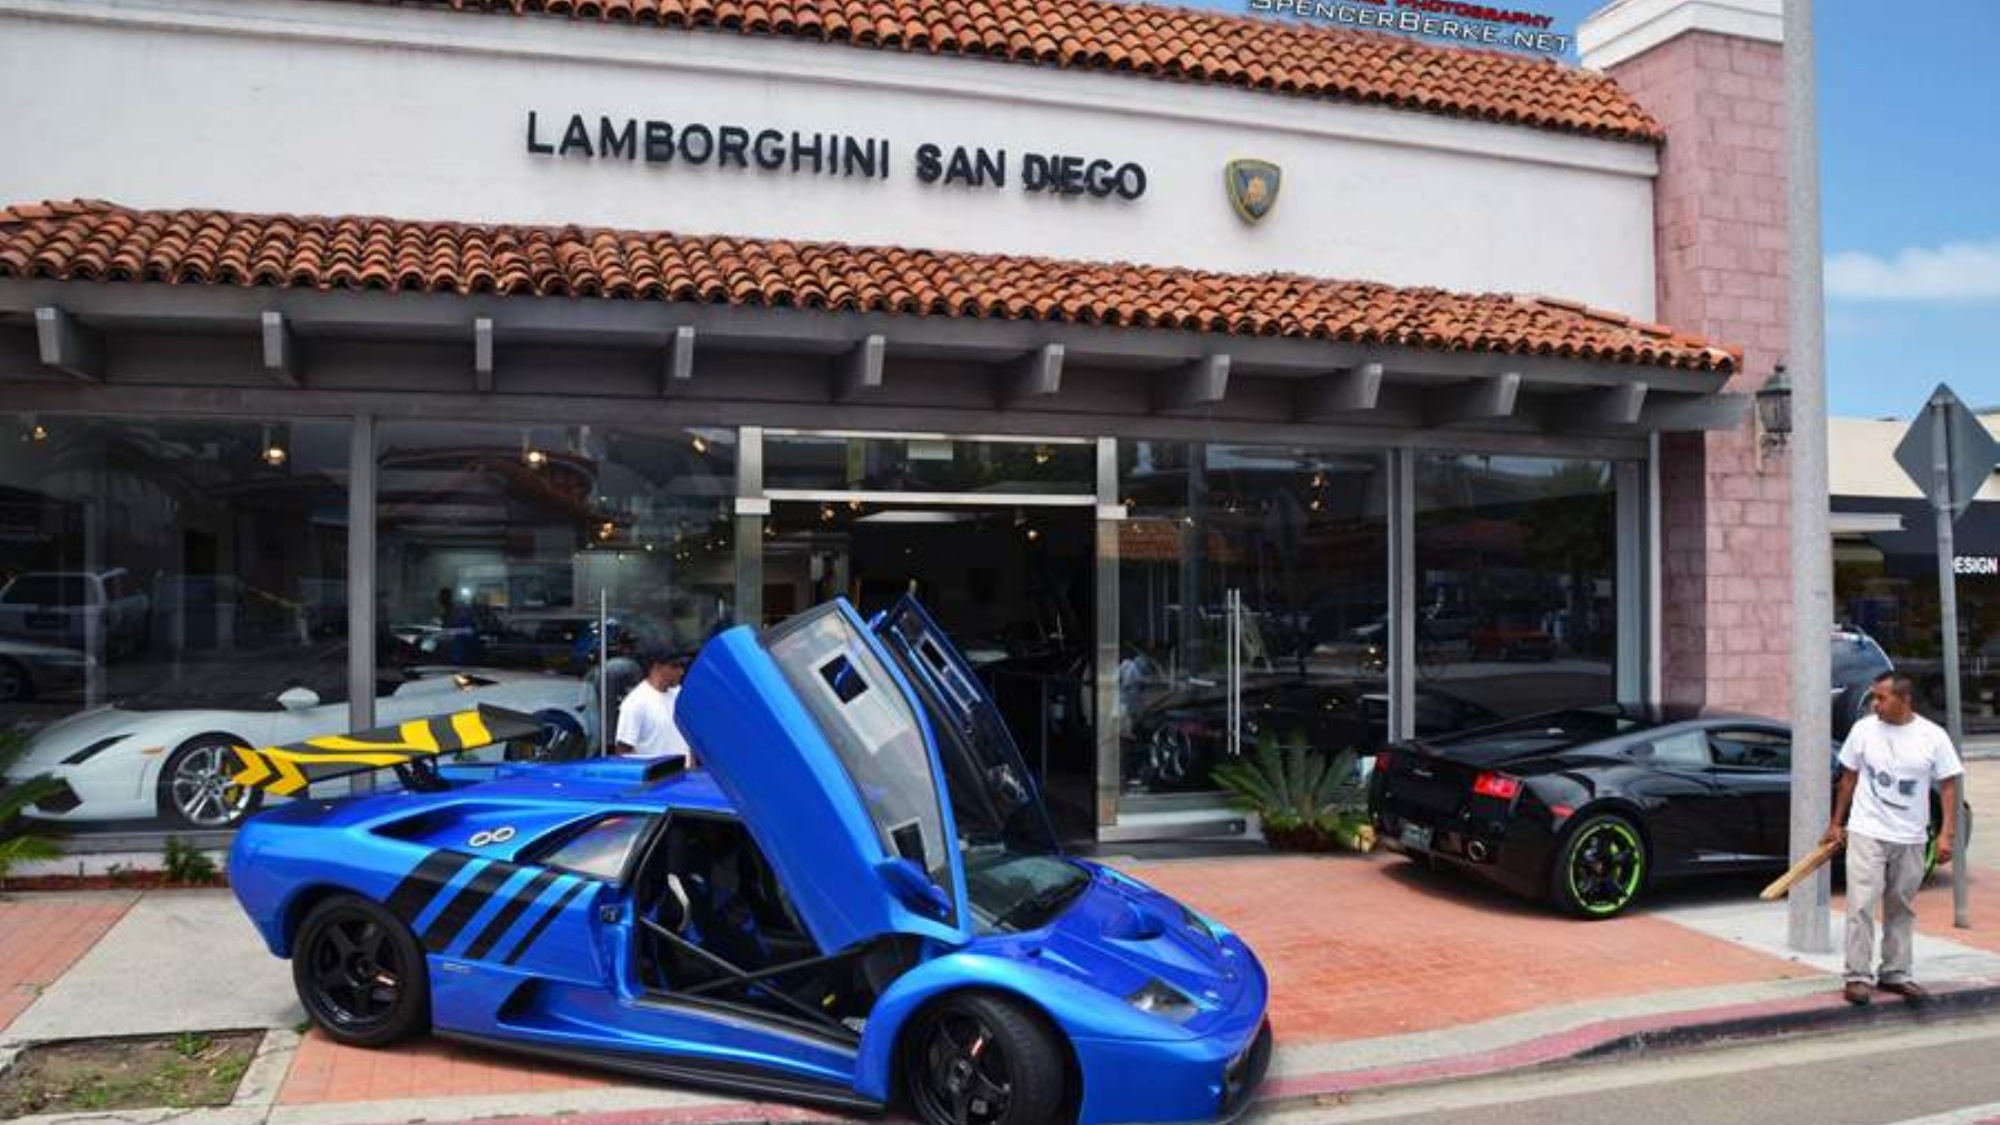 Lamborghini Diablo GT-R